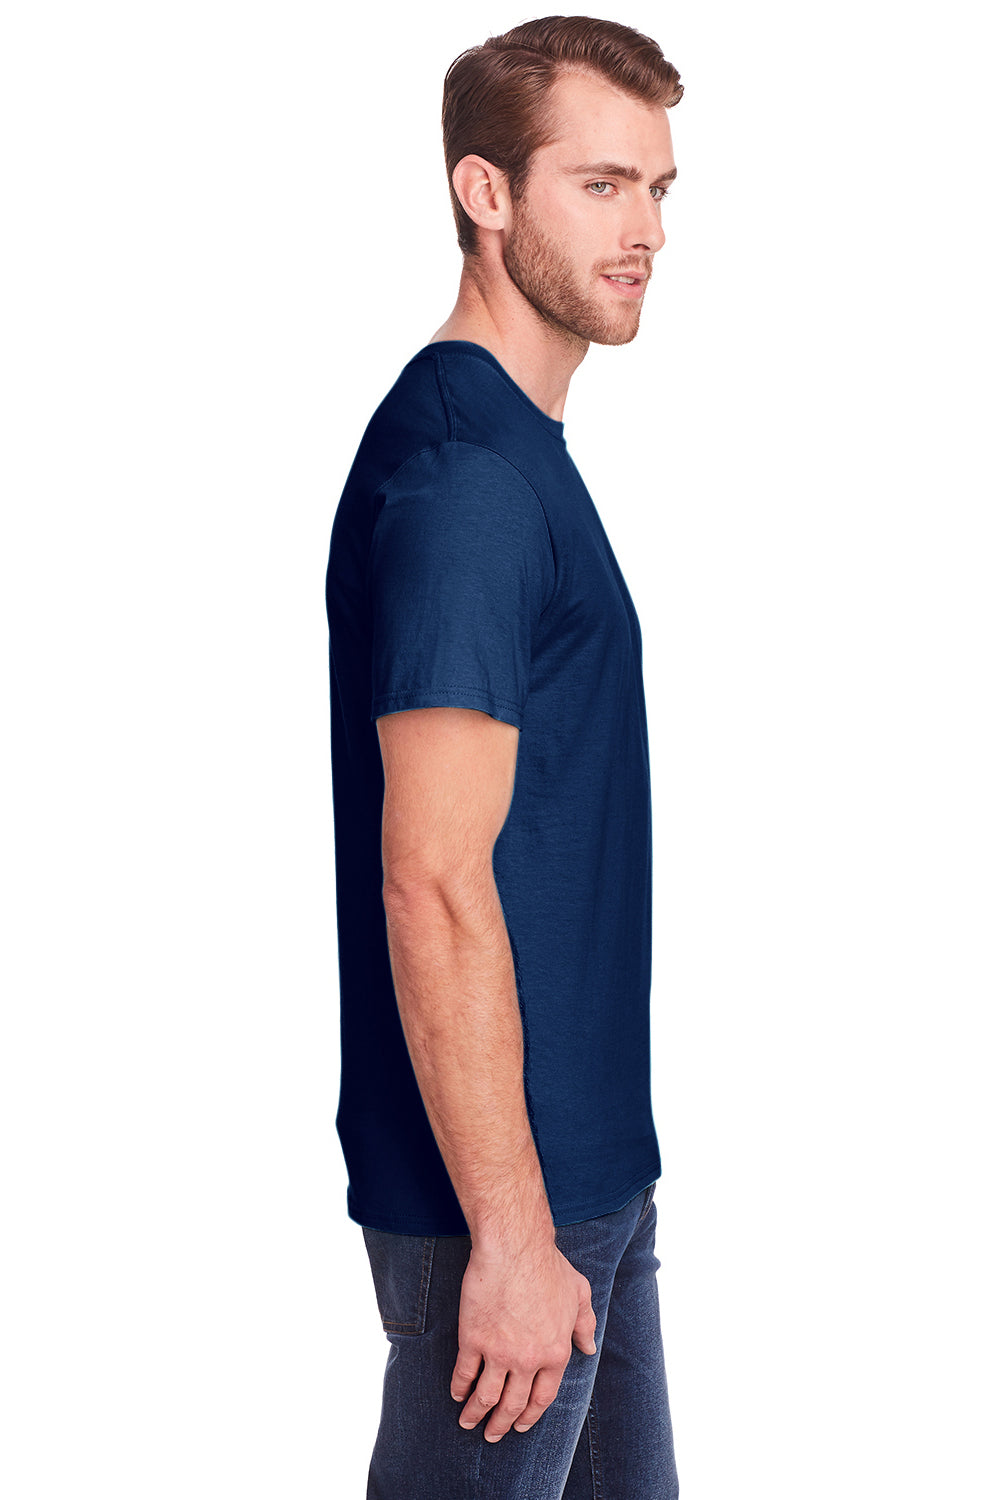 Fruit Of The Loom IC47MR Mens Iconic Short Sleeve Crewneck T-Shirt Navy Blue Side